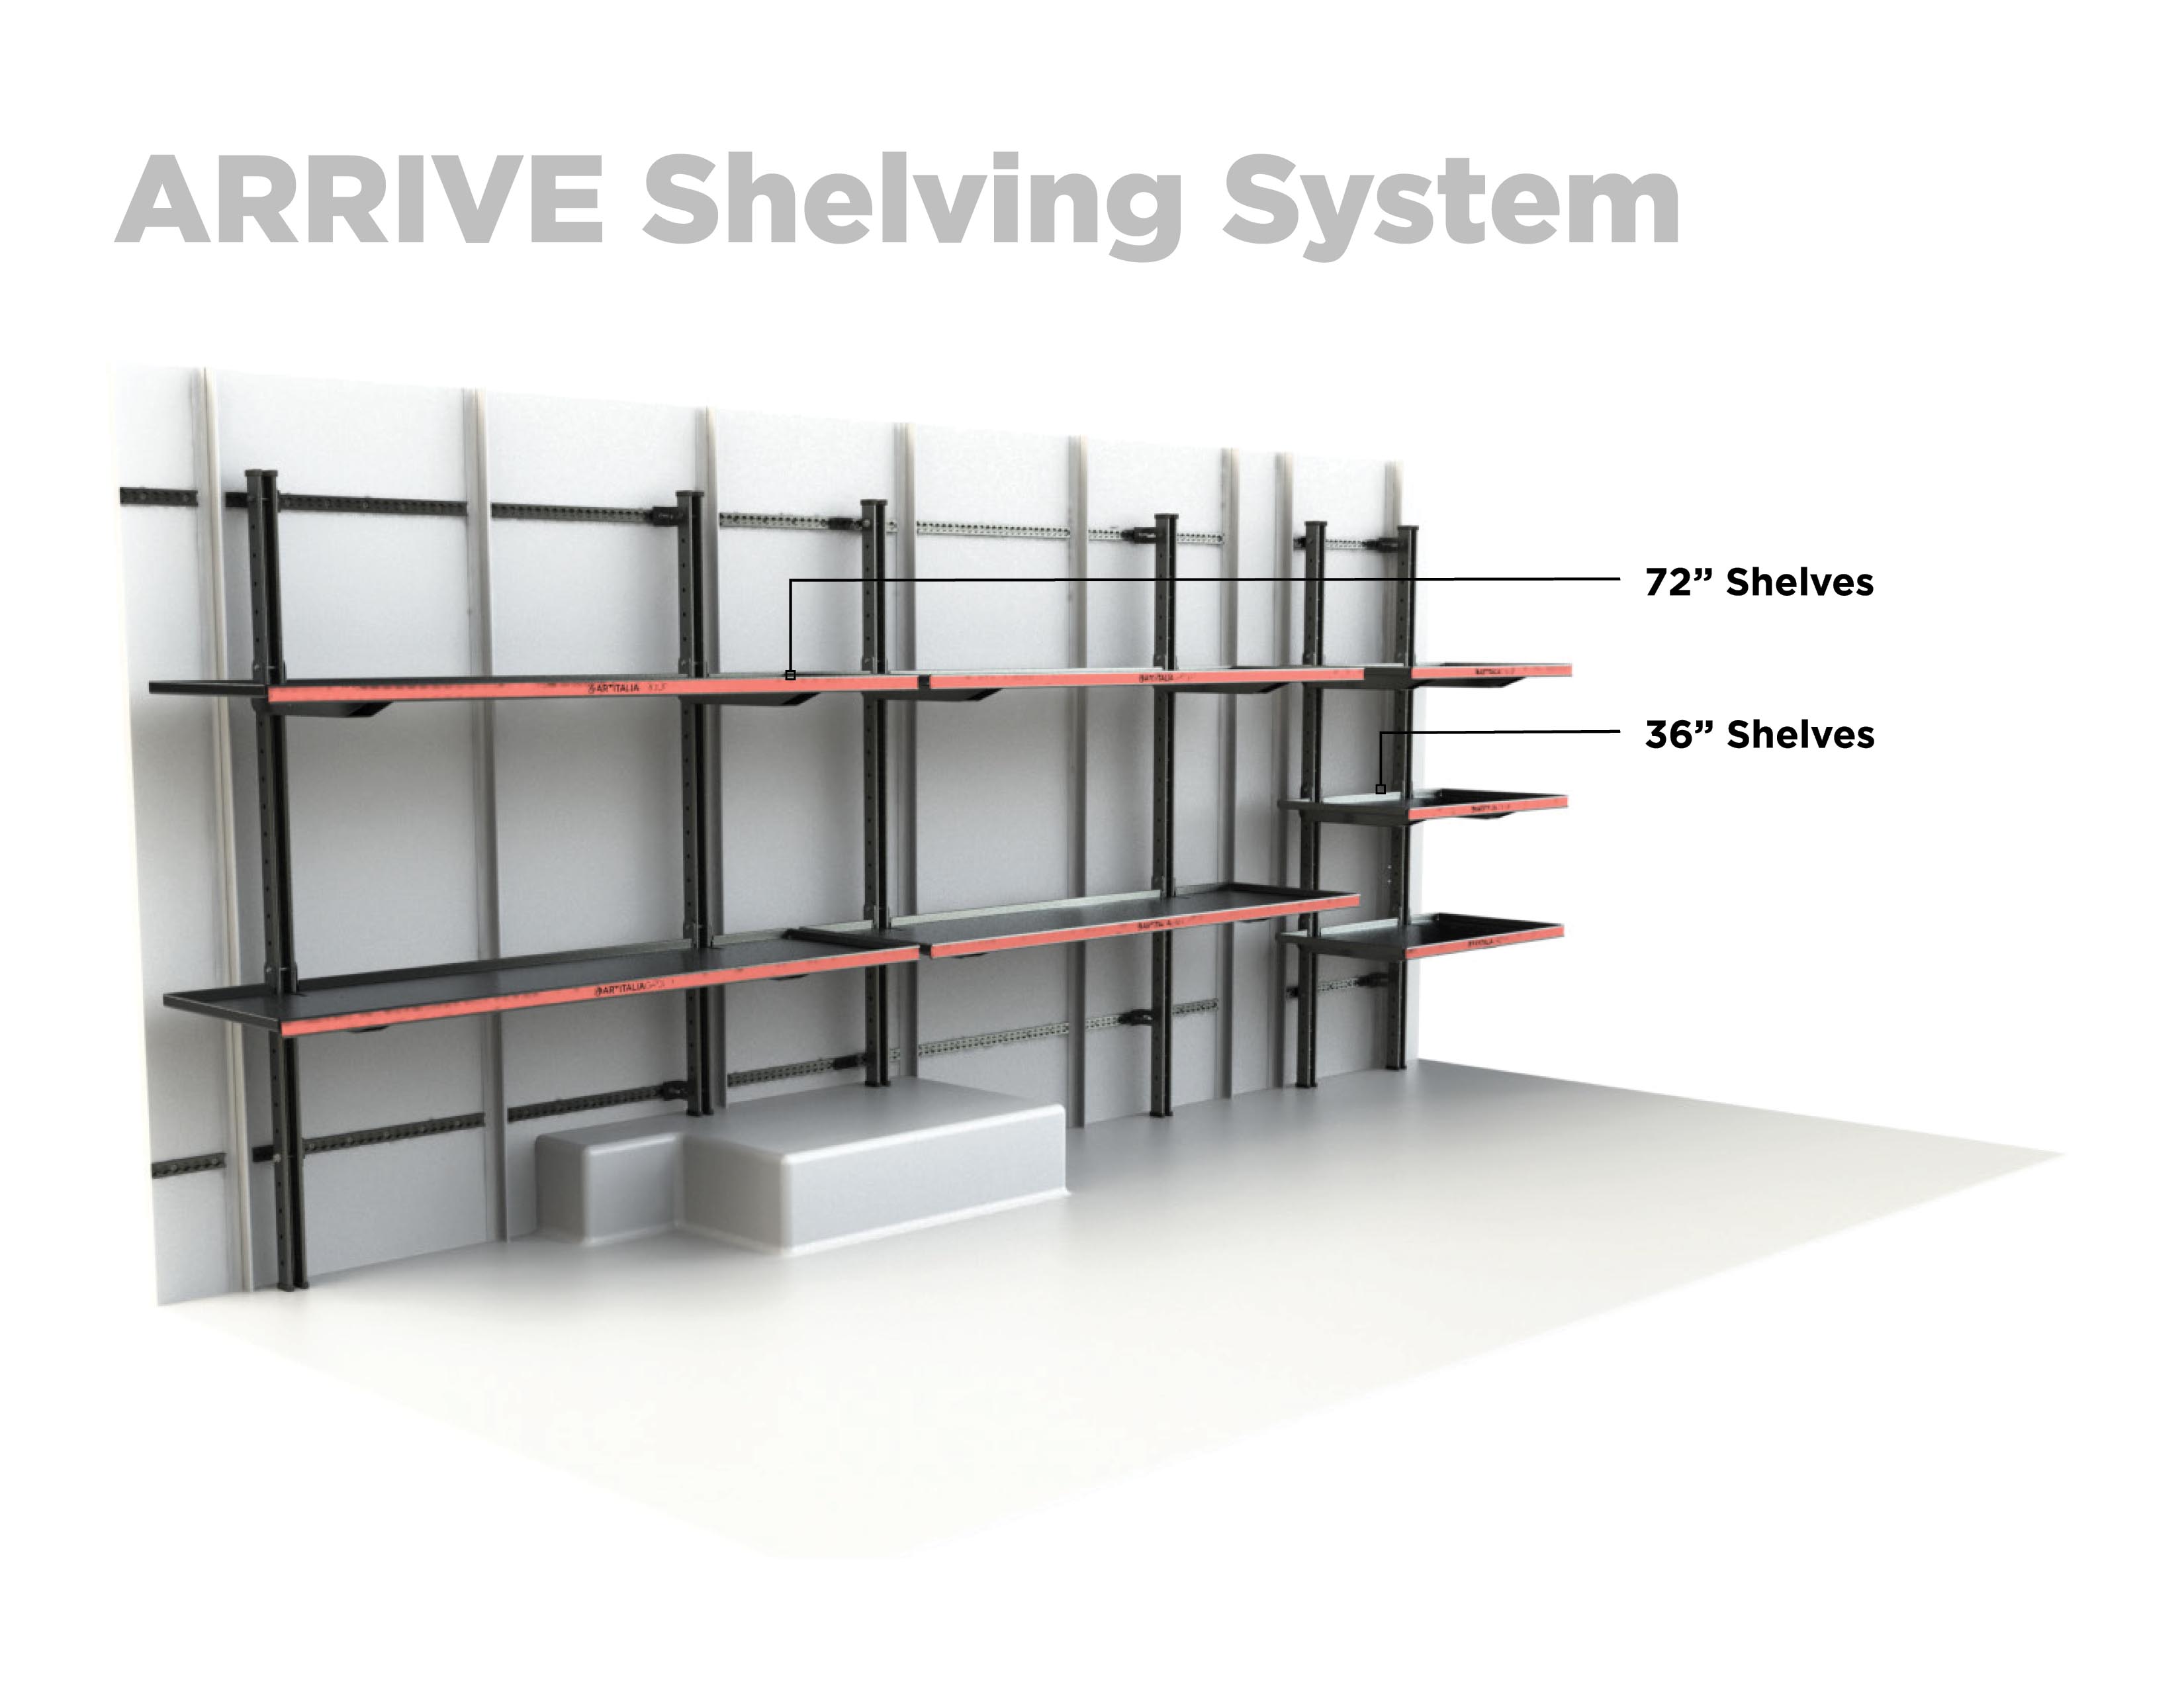 Arrive Shelving System - Material Handling Solutions - Material Handling Equipment - Material Handling - Shipping and Handling - Shelving Solution